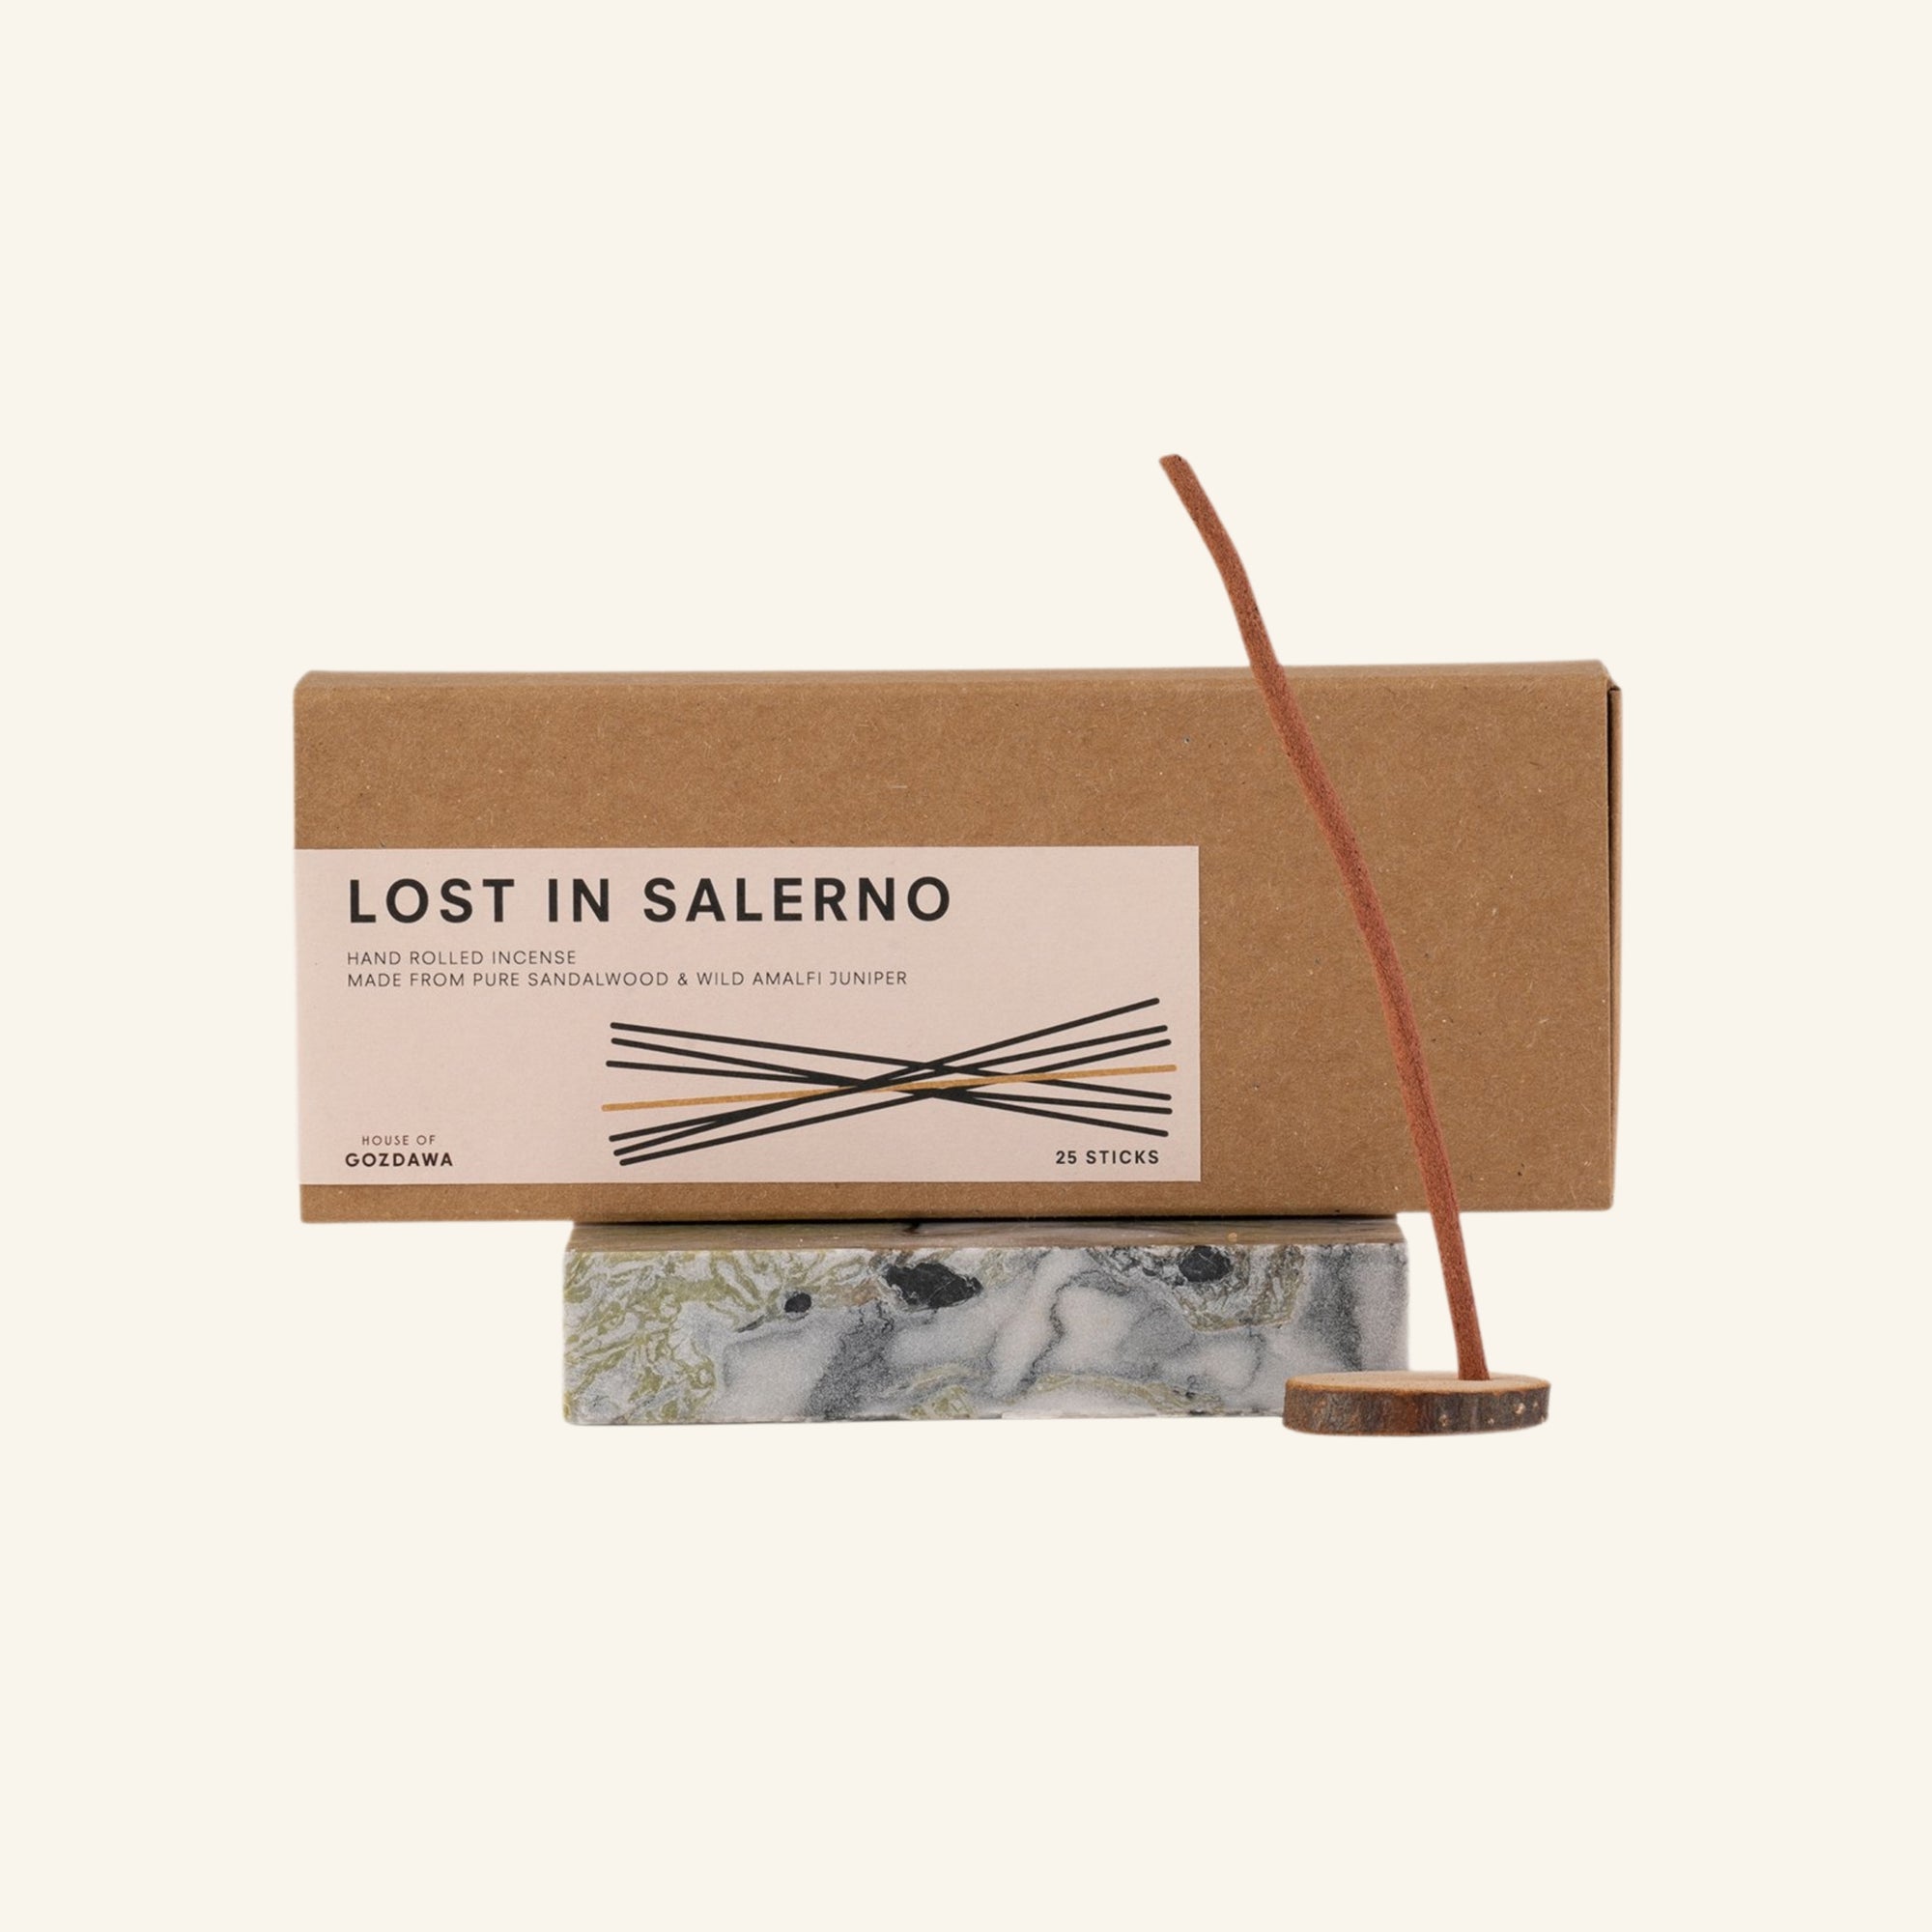 Lost in Salerno natural incense sticks